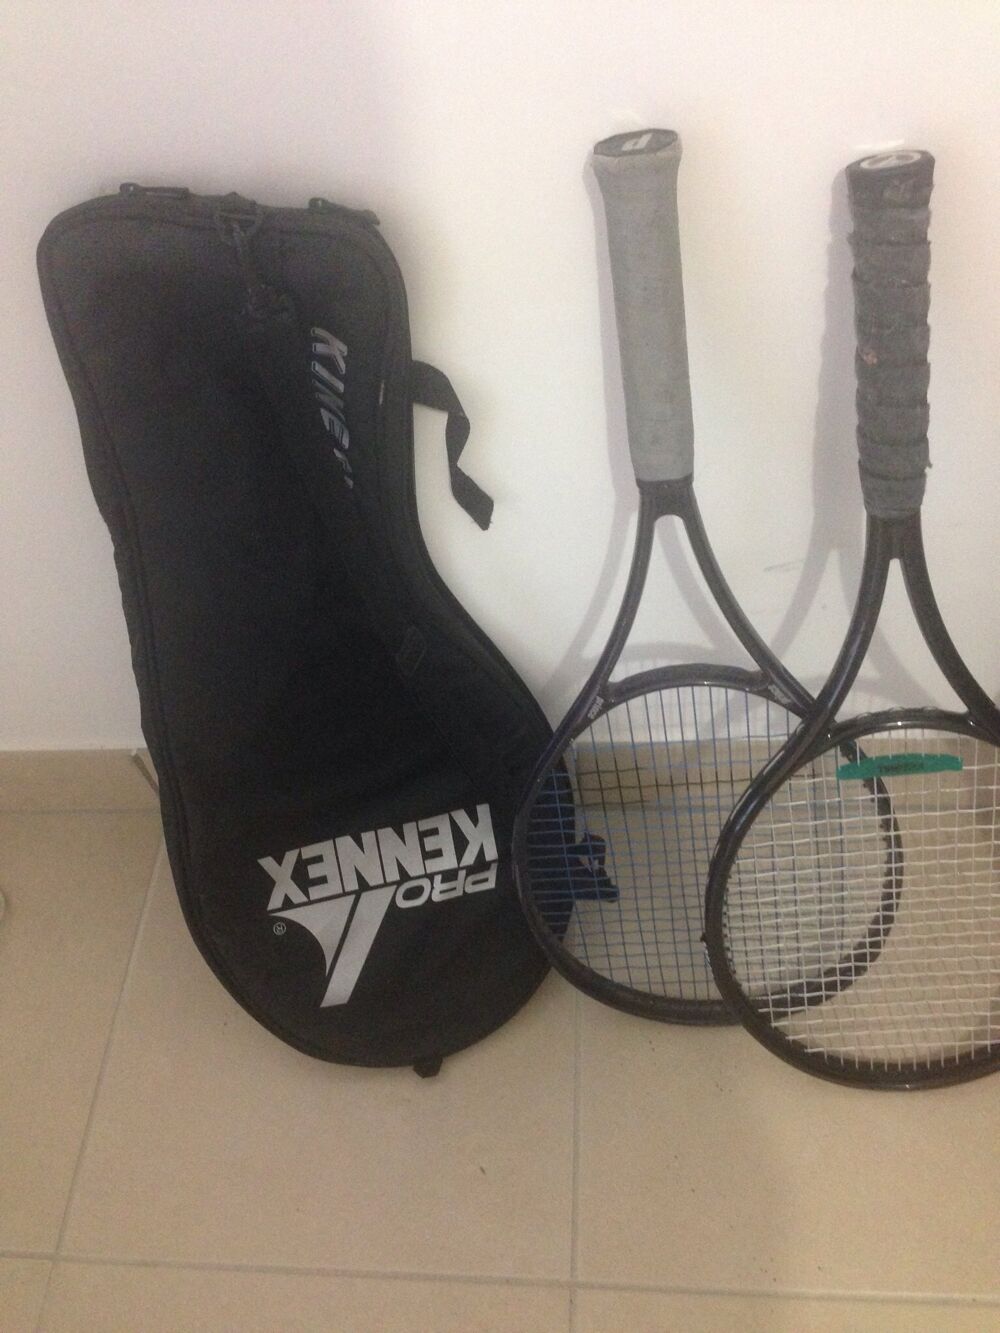 AV 2raquettes tennis Prince et Pro keenex Sports